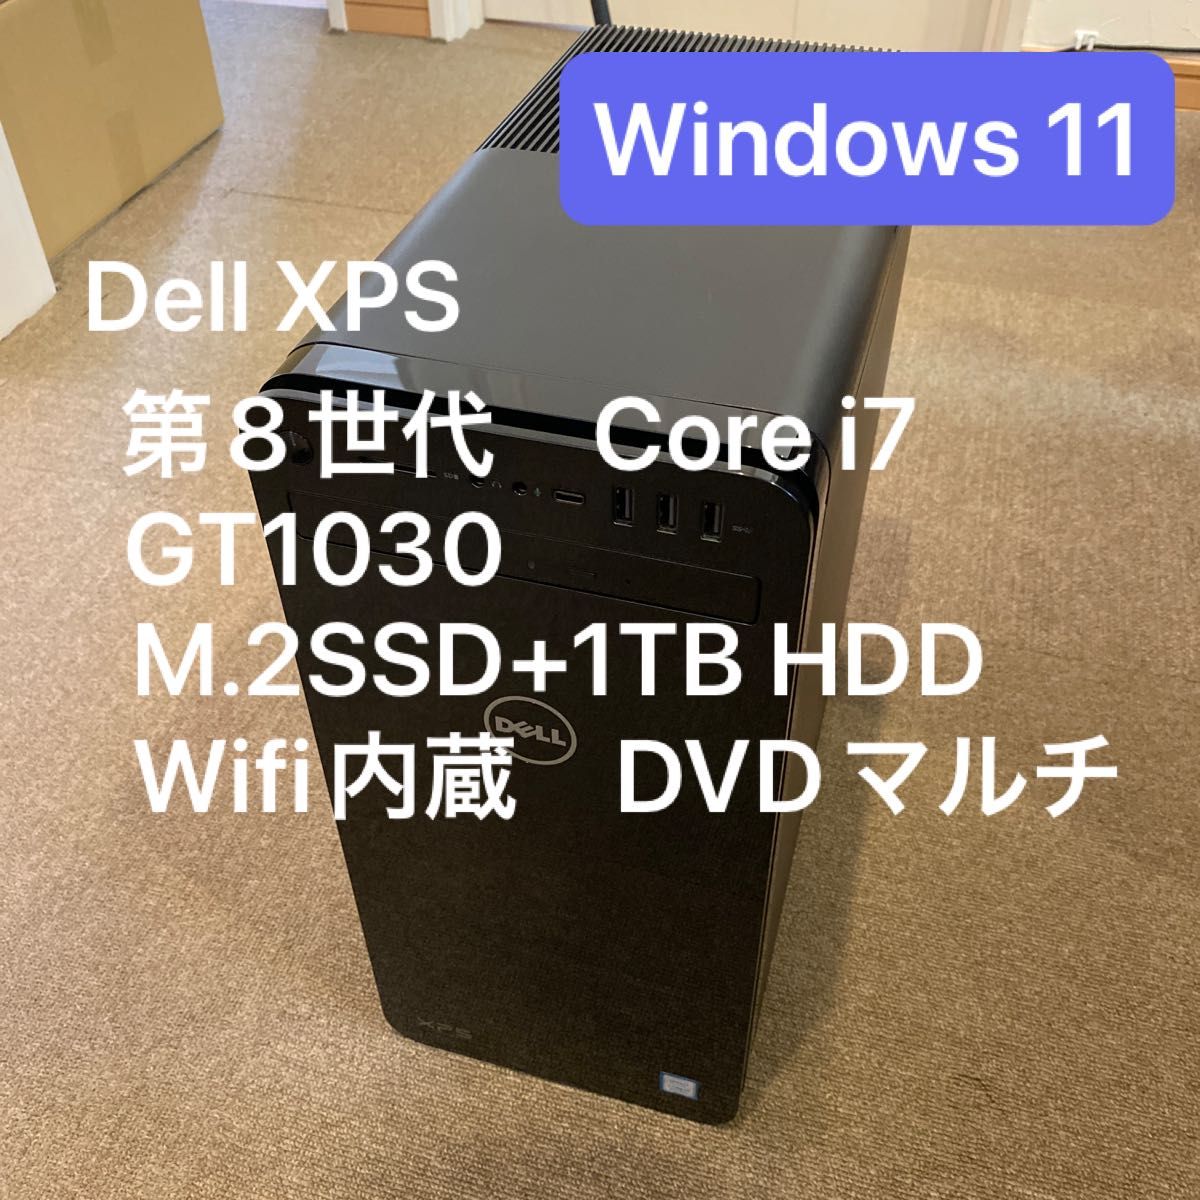 DELL XPS Core i7 8700 GT1030 8GB m.2SSD+1TB HDD Win11 Wifi内蔵 DVD